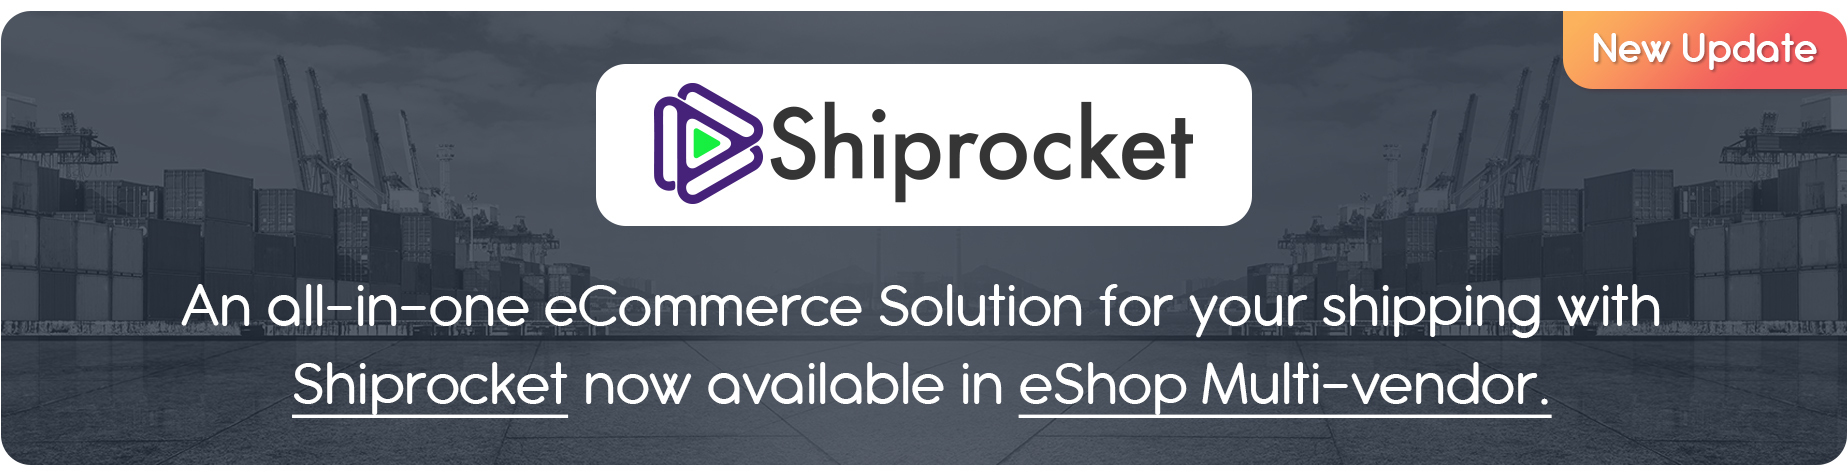 eShop - Multi Vendor eCommerce Website & eCommerce Vendor Marketplace CMS